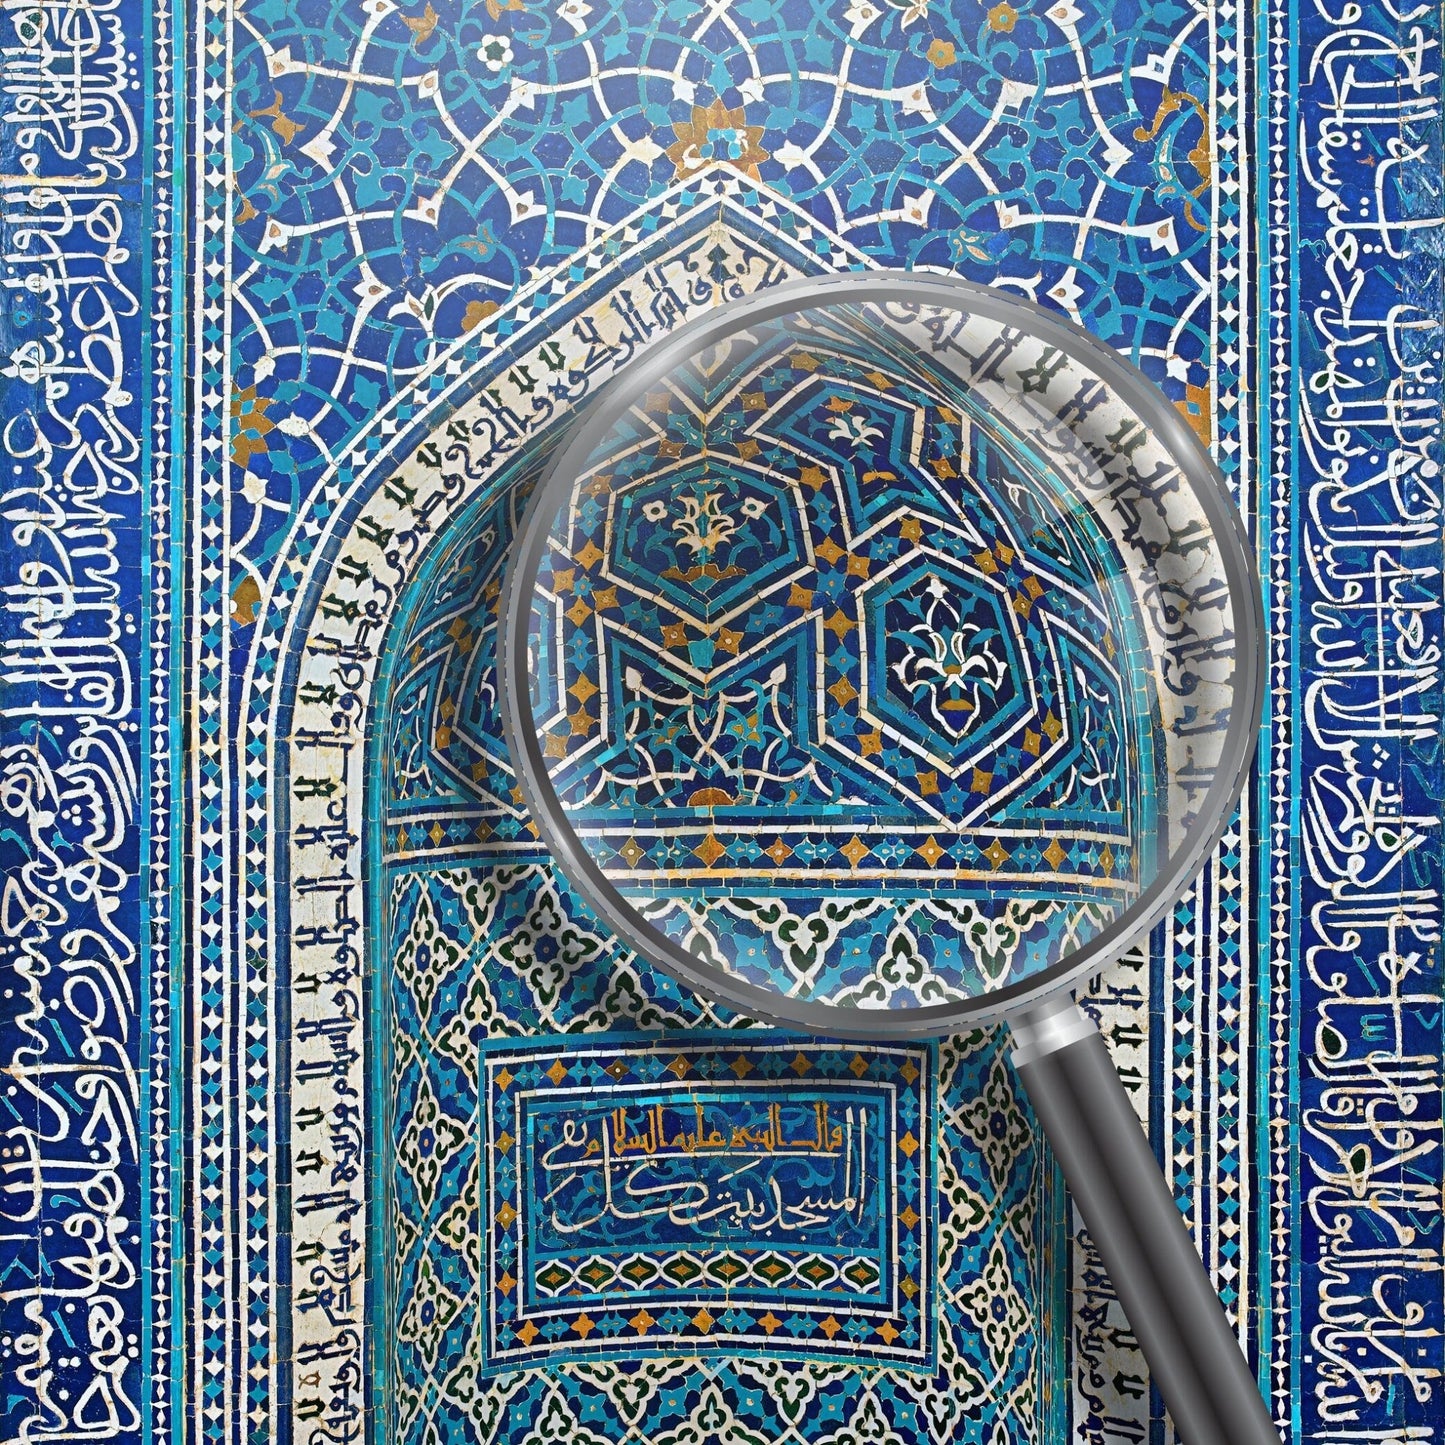 Mihrab - Prayer Niche (Traditional Persian / Islamic Mosaic Art)